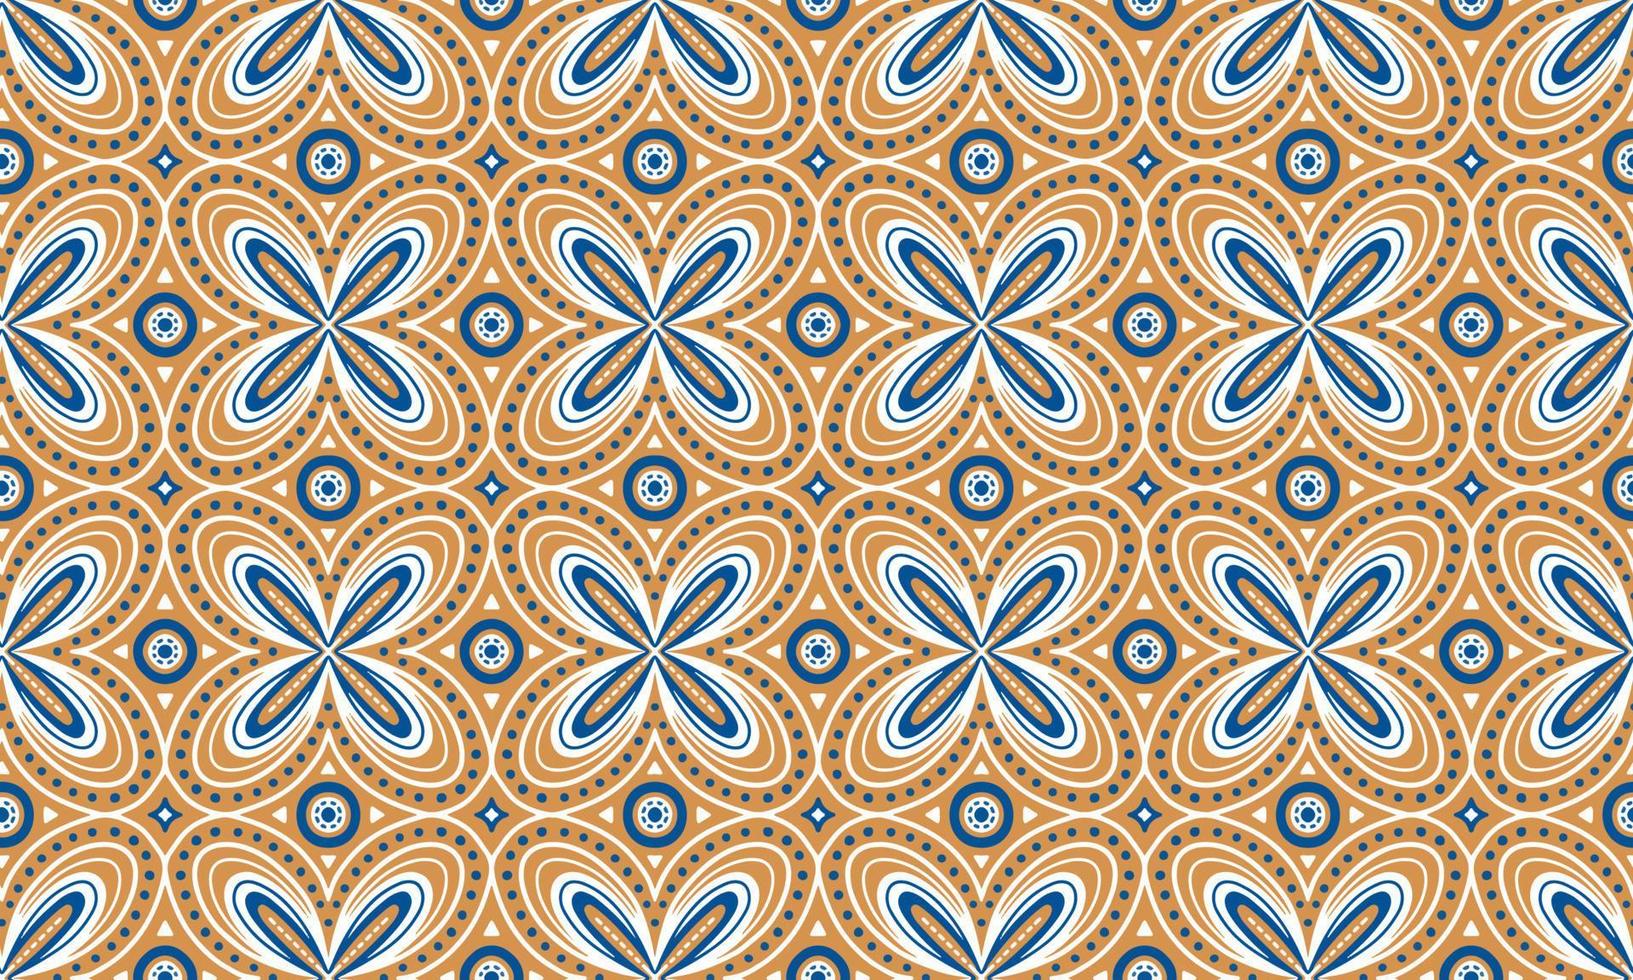 fondo abstracto étnico lindo azul amarillo geométrico tribal ikat motivo popular árabe oriental patrón nativo diseño tradicional, alfombra, papel tapiz, ropa, tela, envoltura, impresión, batik, folk, tejer, vector